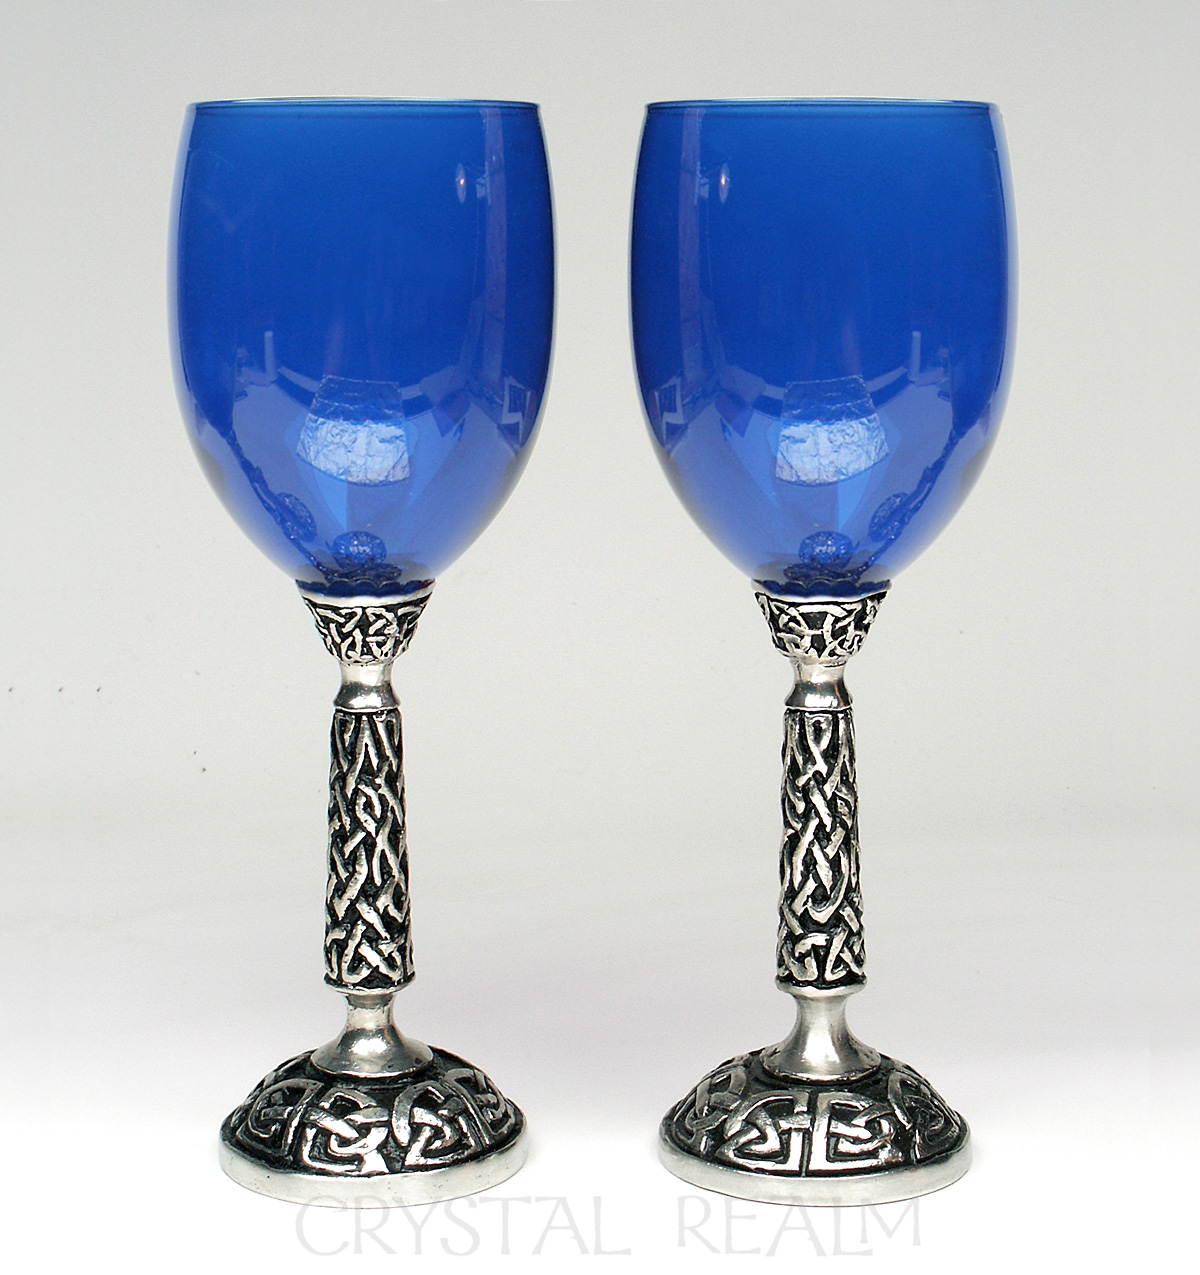 Royal blue wine glass or communion goblet with Celtic knotwork stem